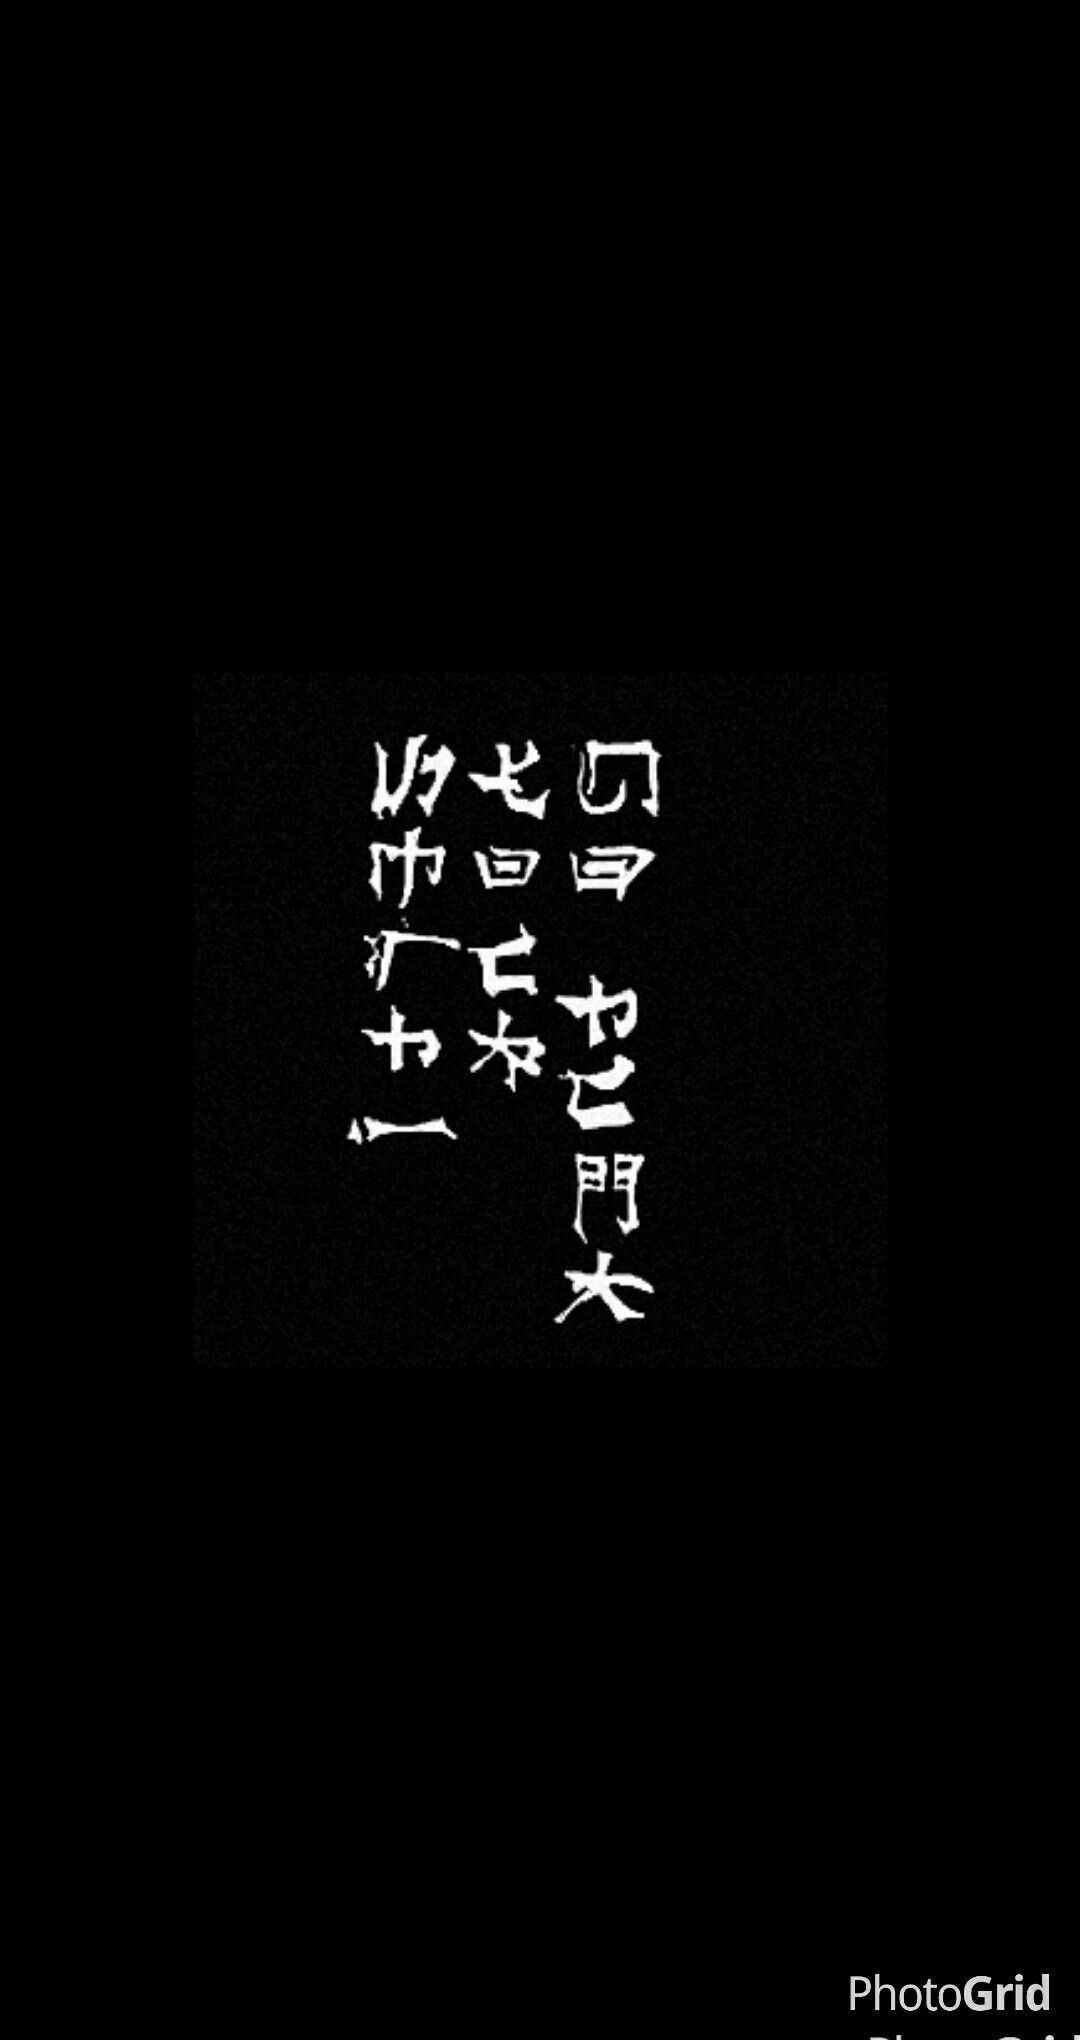  China Hintergrundbild 1080x2040. Aesthetic chinese alphabets Wallpaper Download